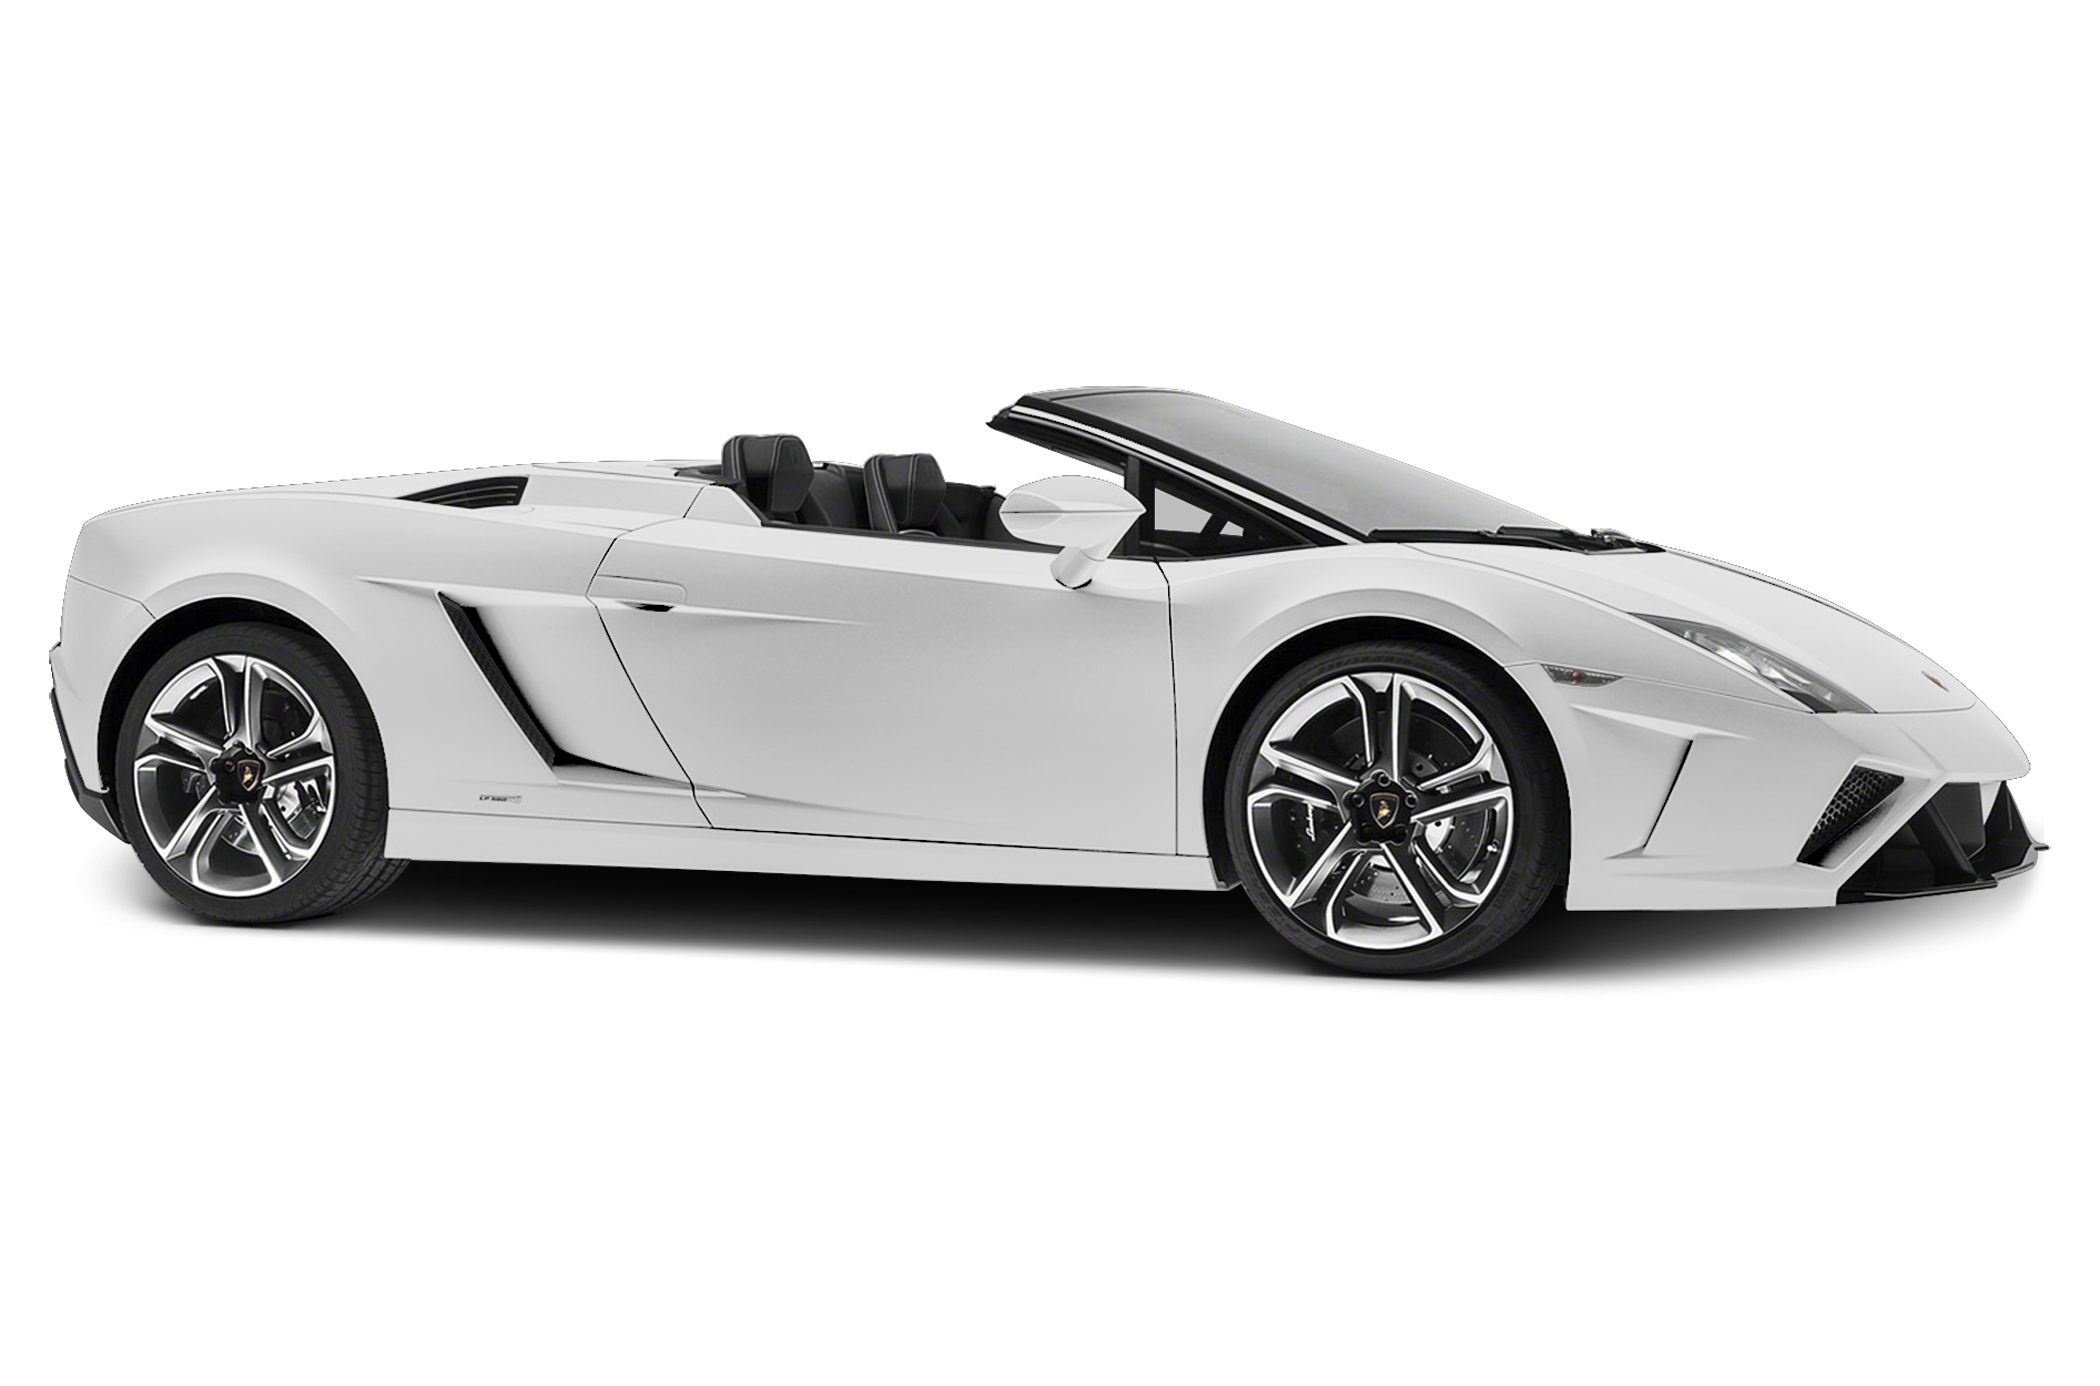 2013 Lamborghini Gallardo Lp560 4 2dr All Wheel Drive Spyder Pictures